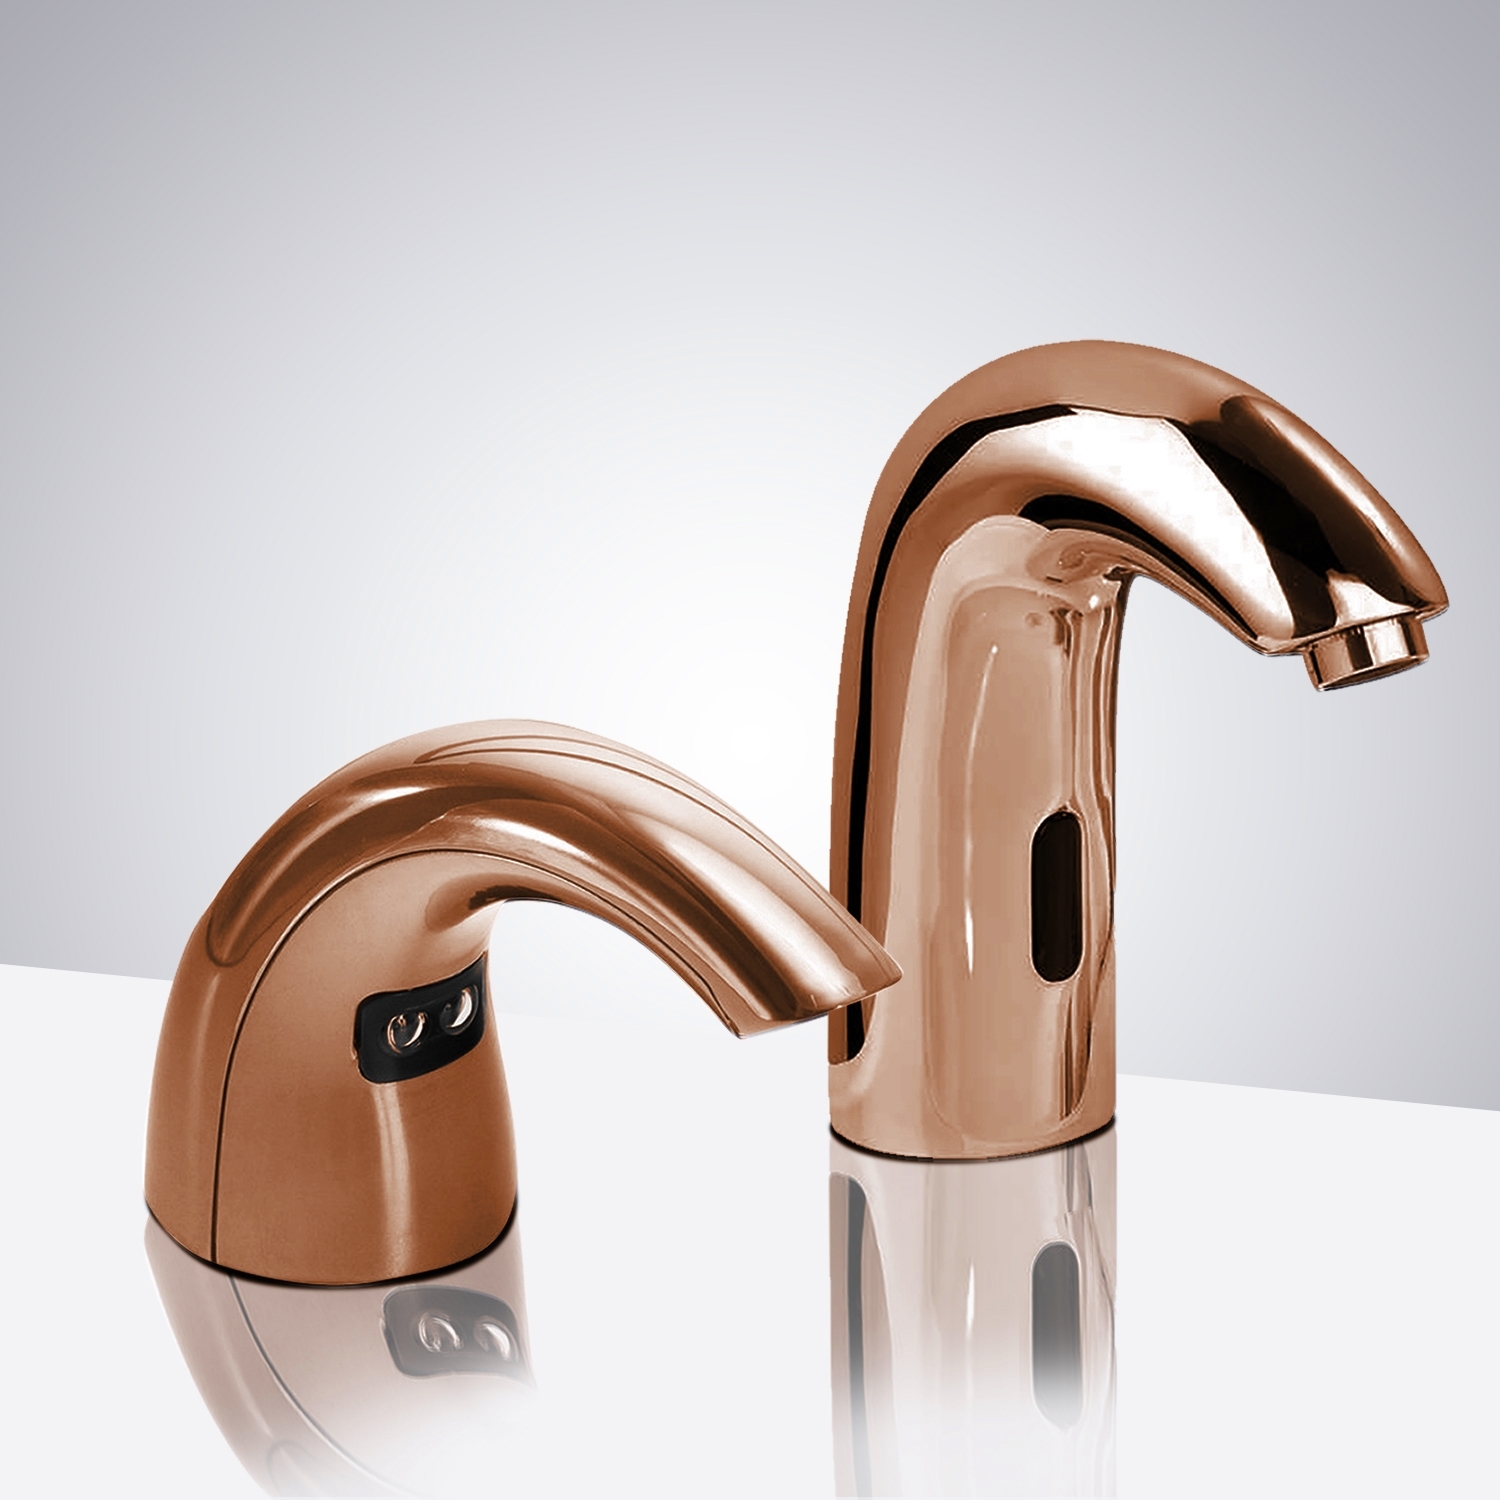 Fontana Motion Sensor Faucet & Hand Sanitizer Automatic Soap Dispenser for Restrooms in Rose Gold